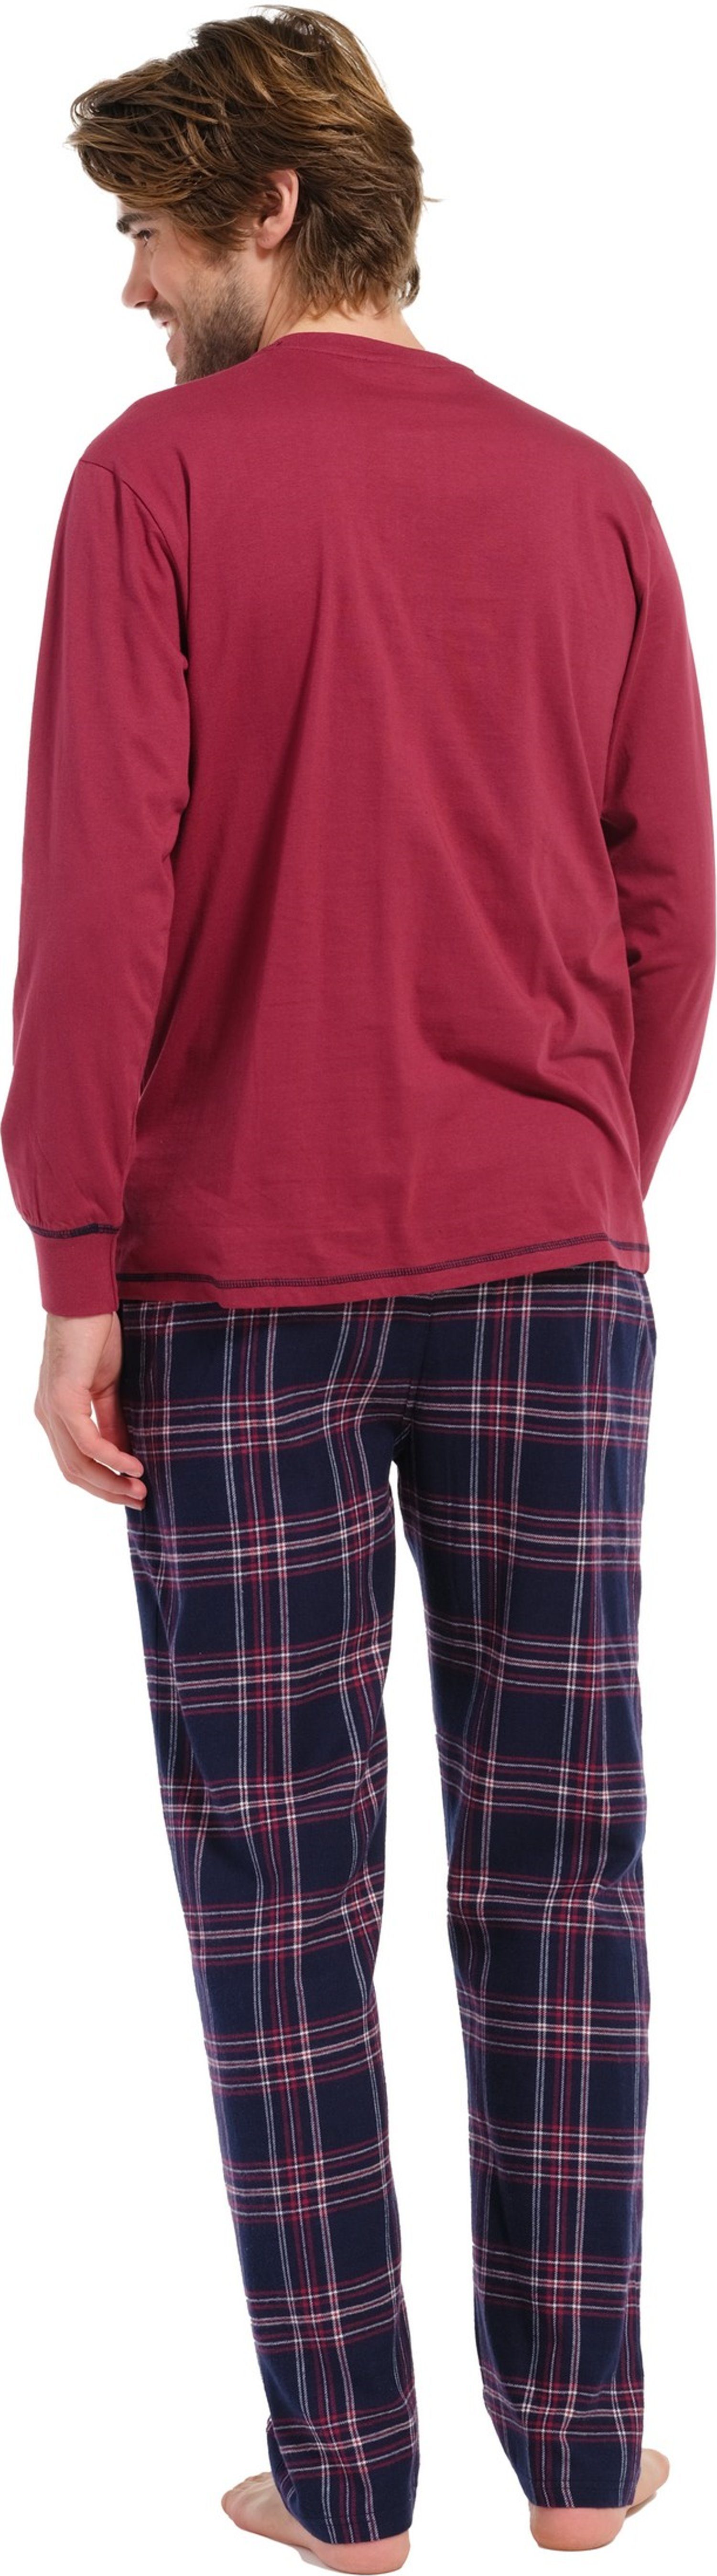 Pastunette Pyjama Herren (2 tlg) Baumwolle Schlafanzug